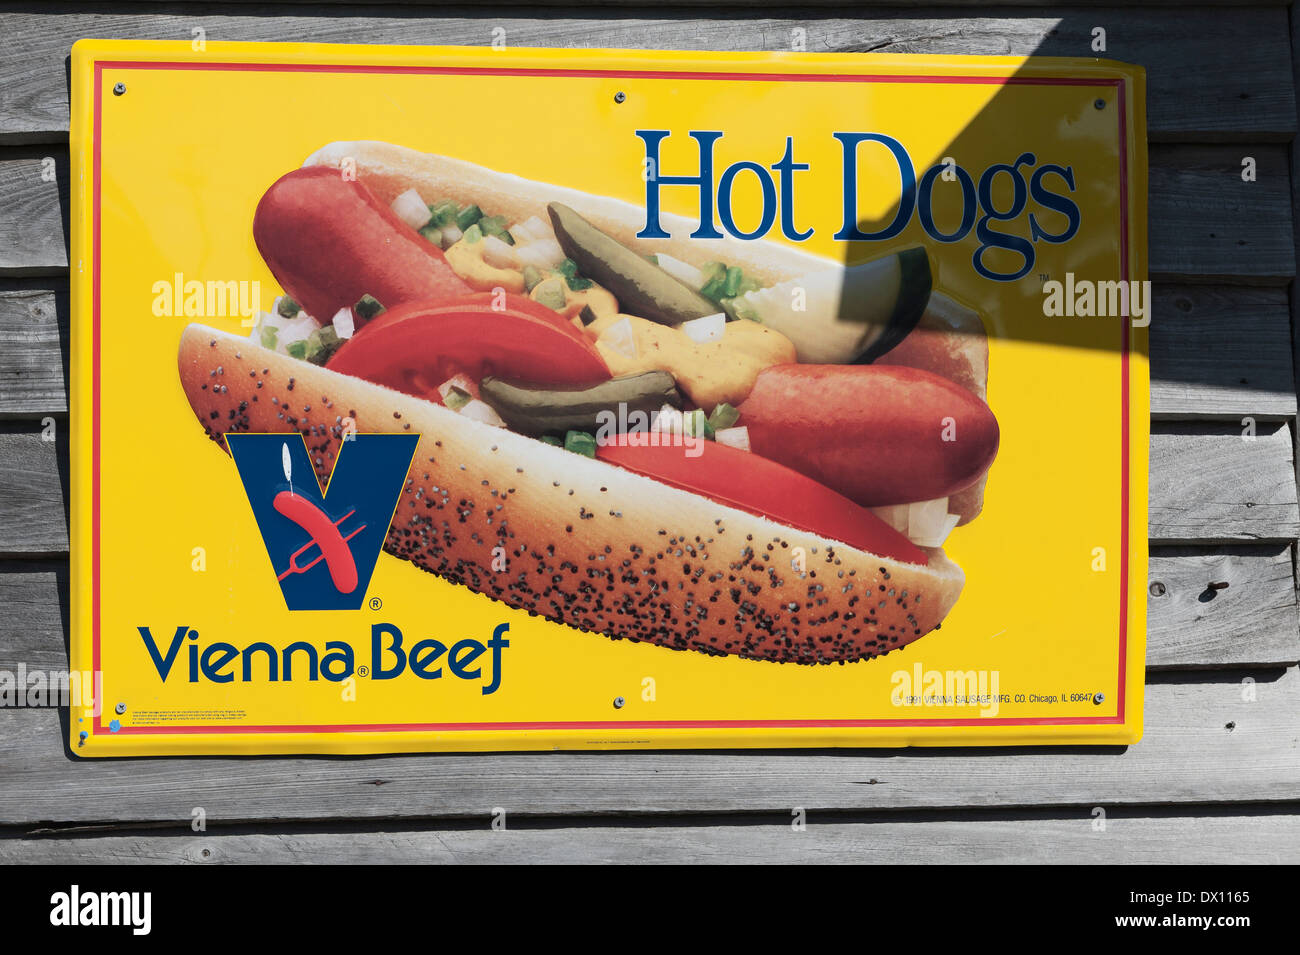 https://c8.alamy.com/comp/DX1165/cedar-key-florida-gulf-coast-hot-dog-sign-vienna-beef-advertisement-DX1165.jpg